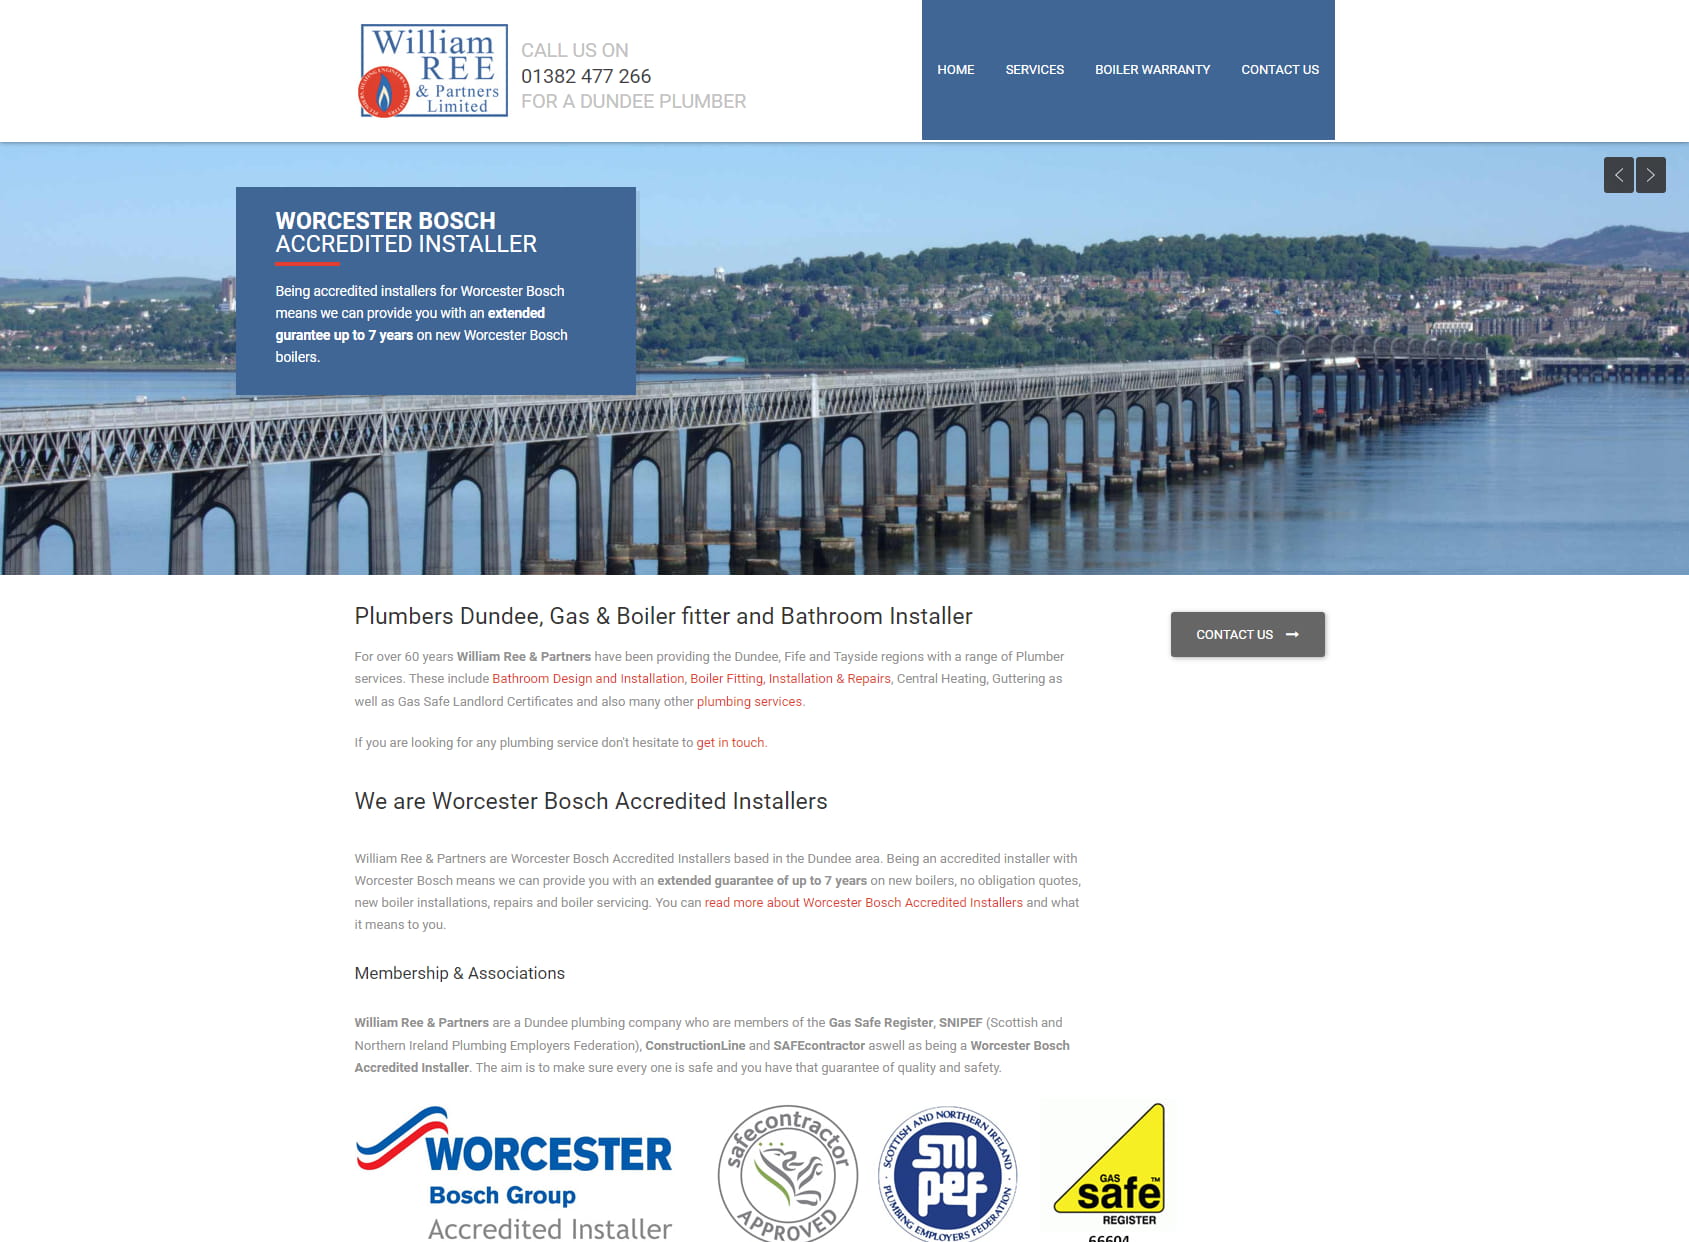 William Ree & Partners - Plumbing, Boilers and Heating